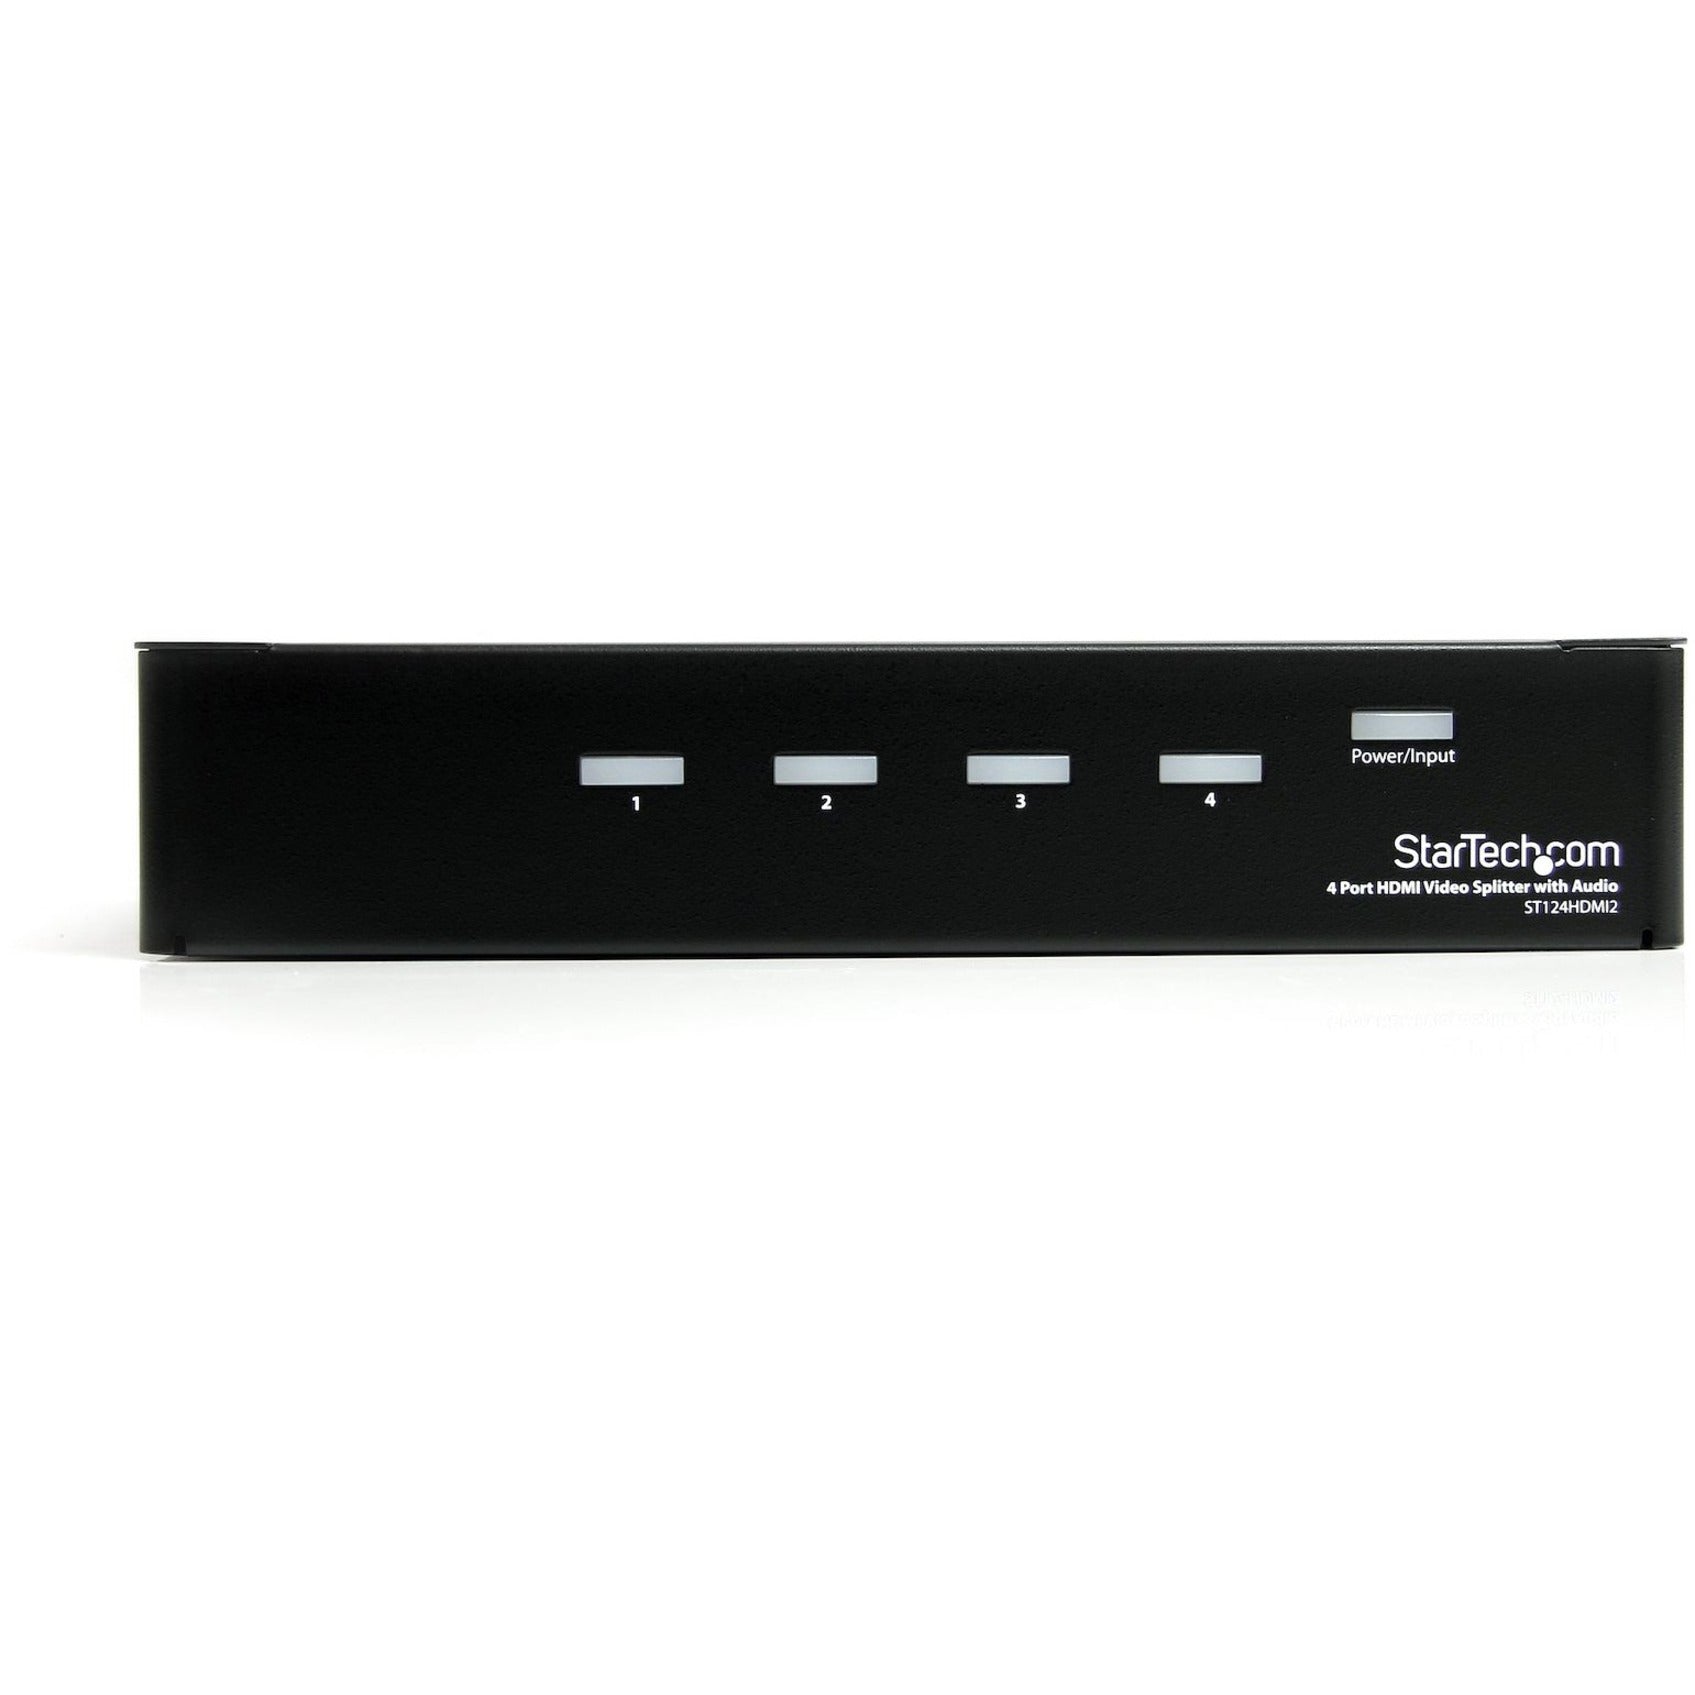 StarTech.com ST124HDMI2 4-Port HDMI Splitter and Signal Amplifier, 1920 x 1200 Maximum Video Resolution, 2 Year Limited Warranty